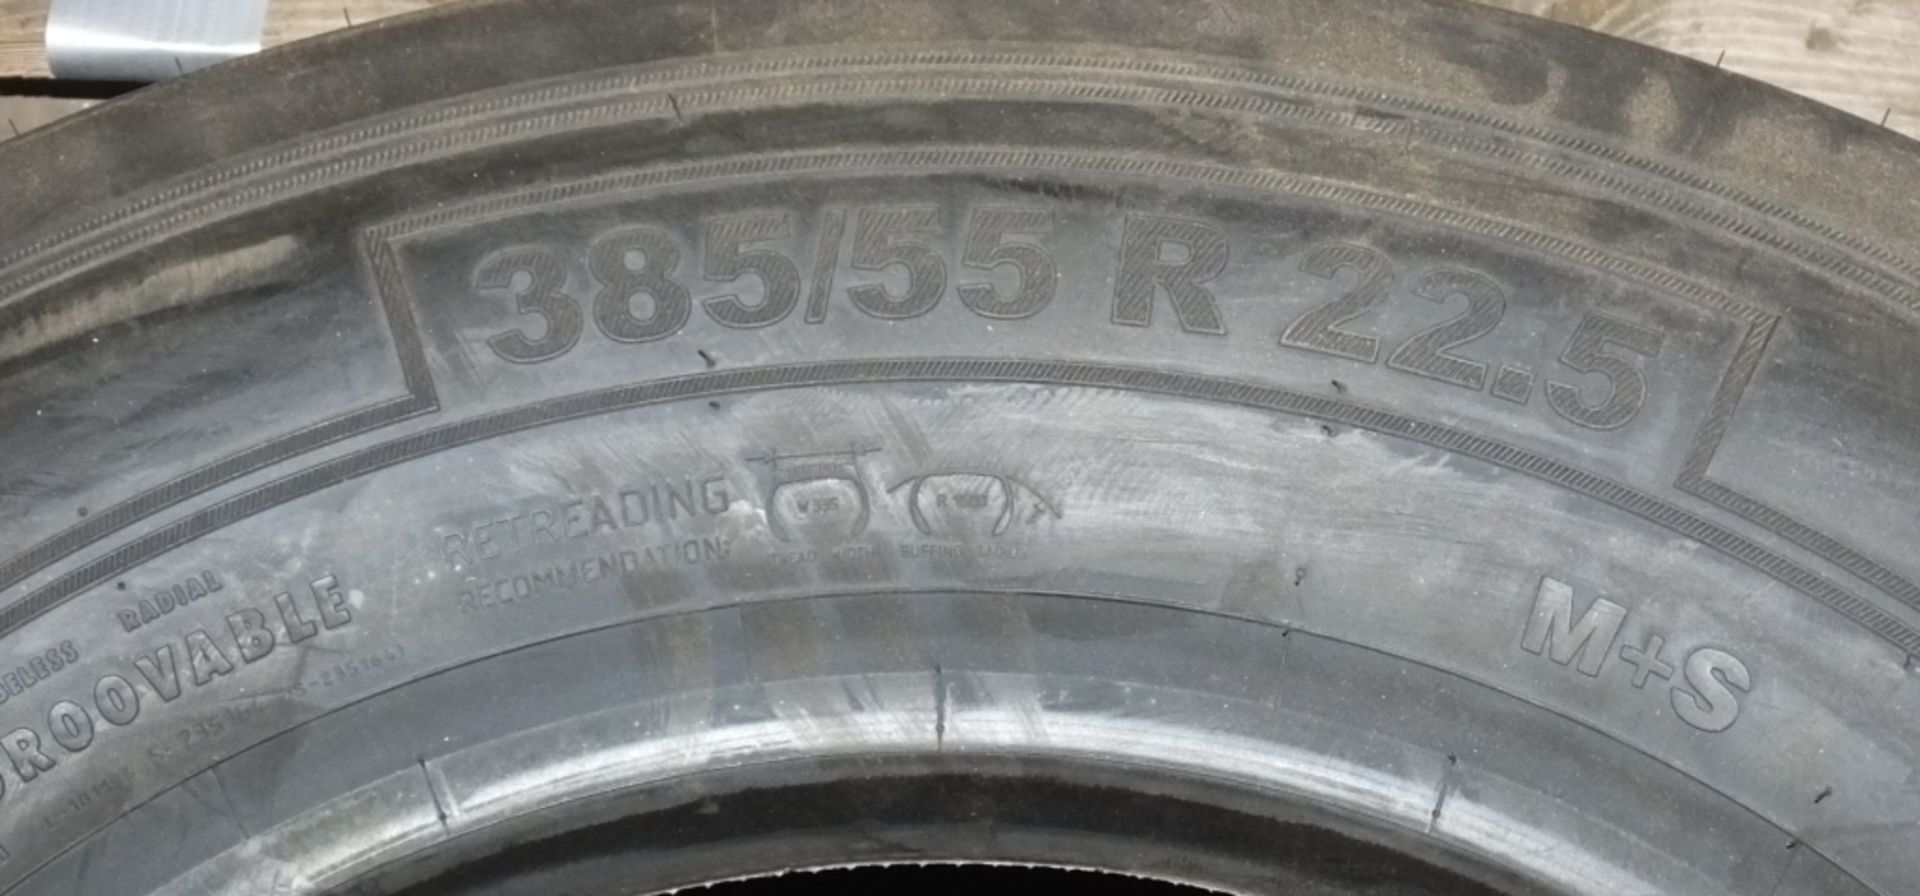 Barum BF 200 Road tire - 385/55 R 22.5 (new & unused) - Image 4 of 7